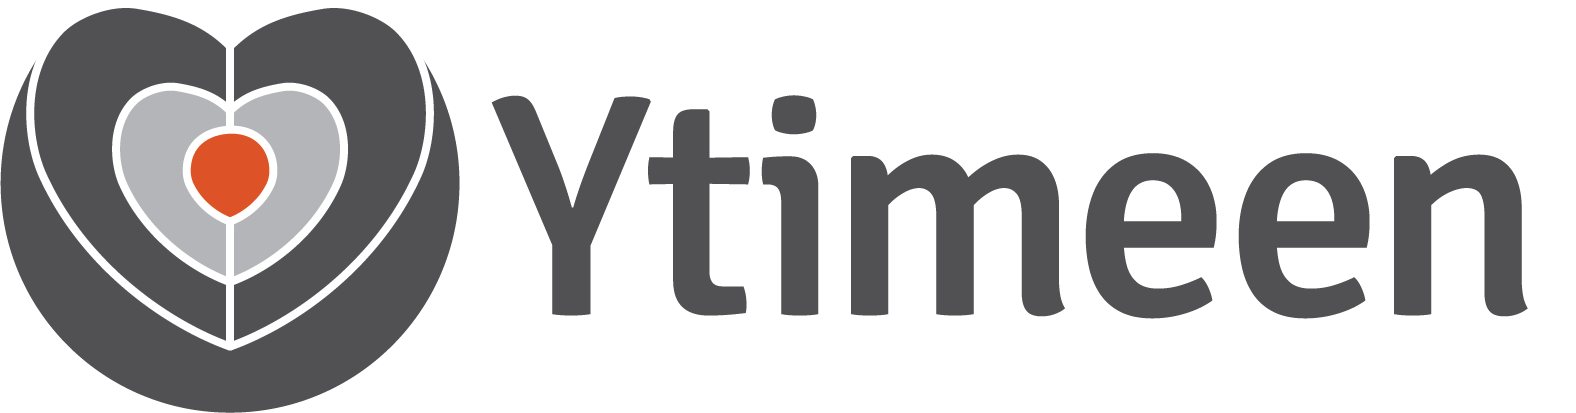 Ytimeen logo